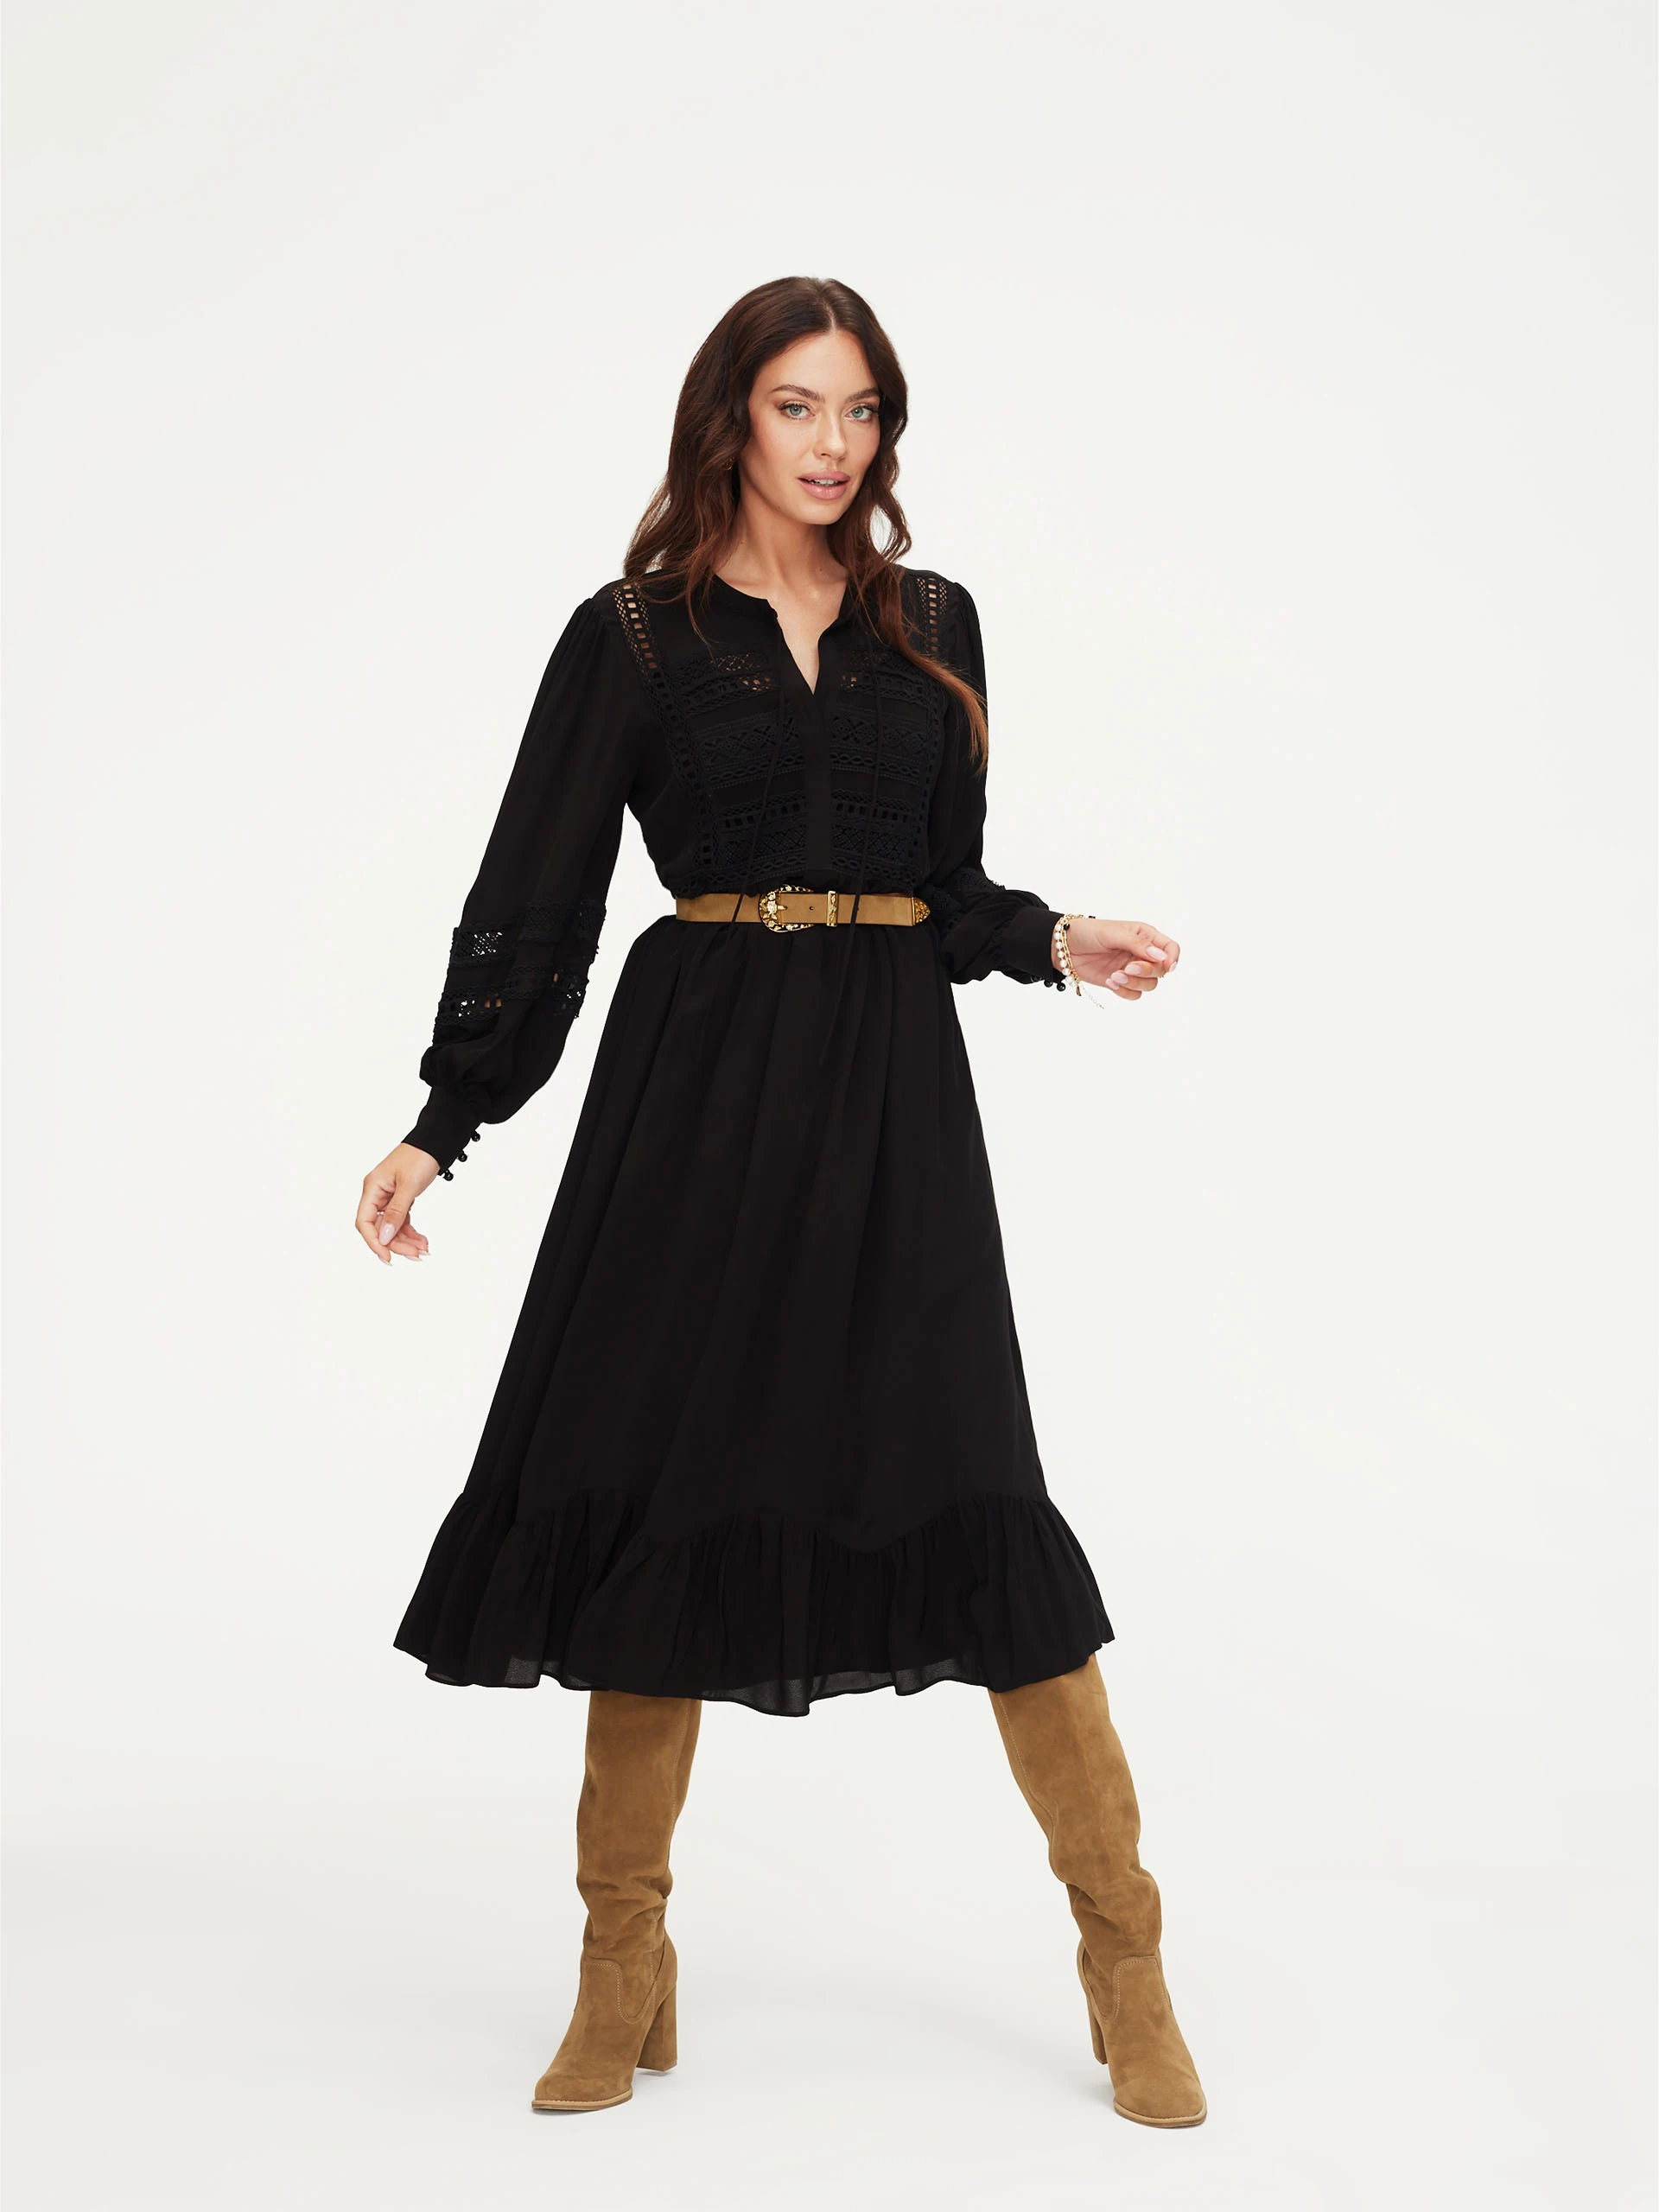 Black midi dress with openwork details